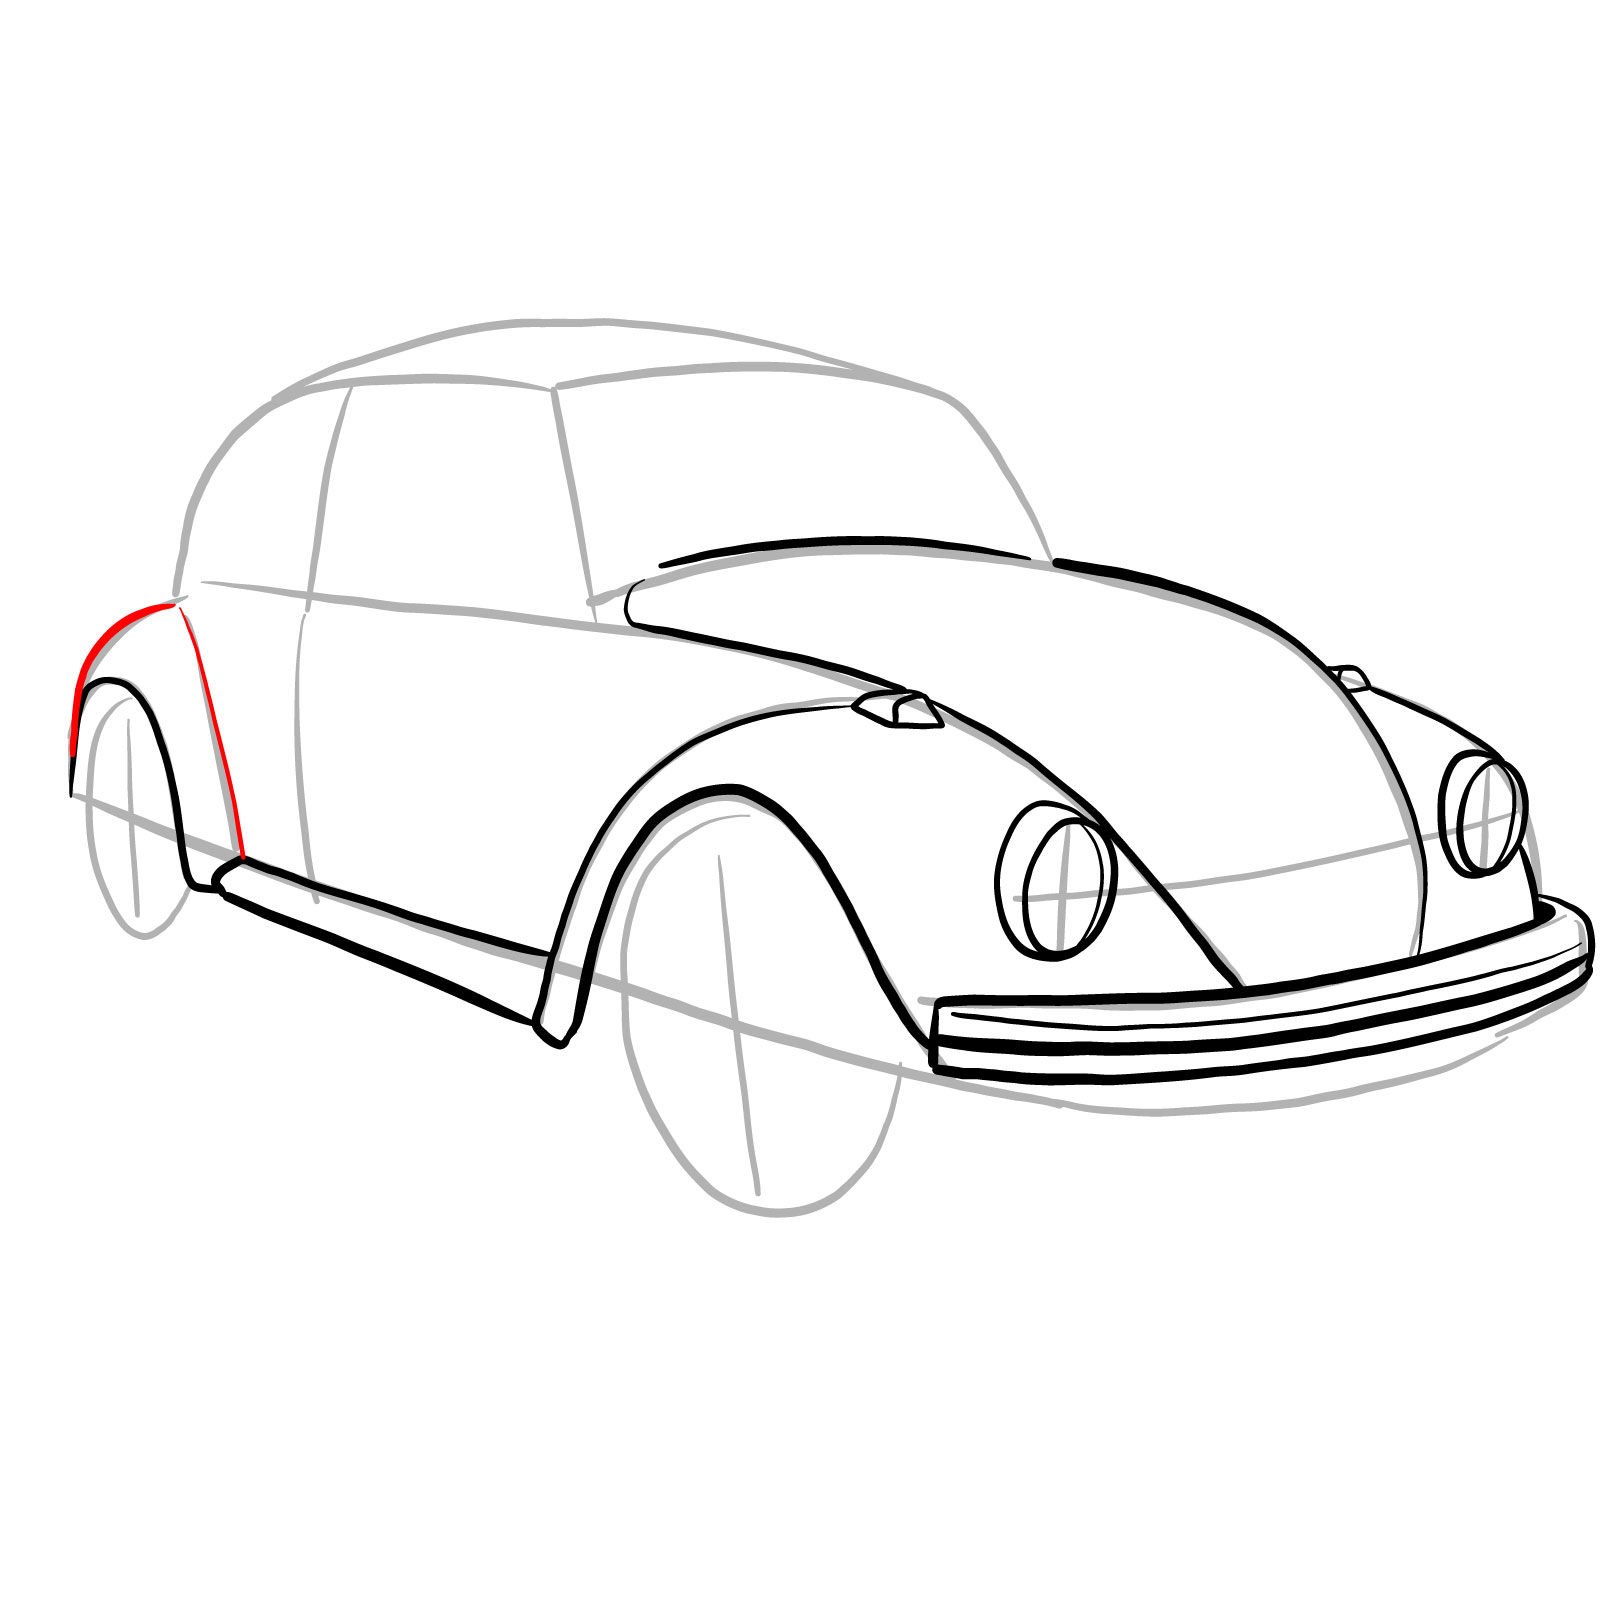 How to draw Volkswagen Beetle 1972 - step 17